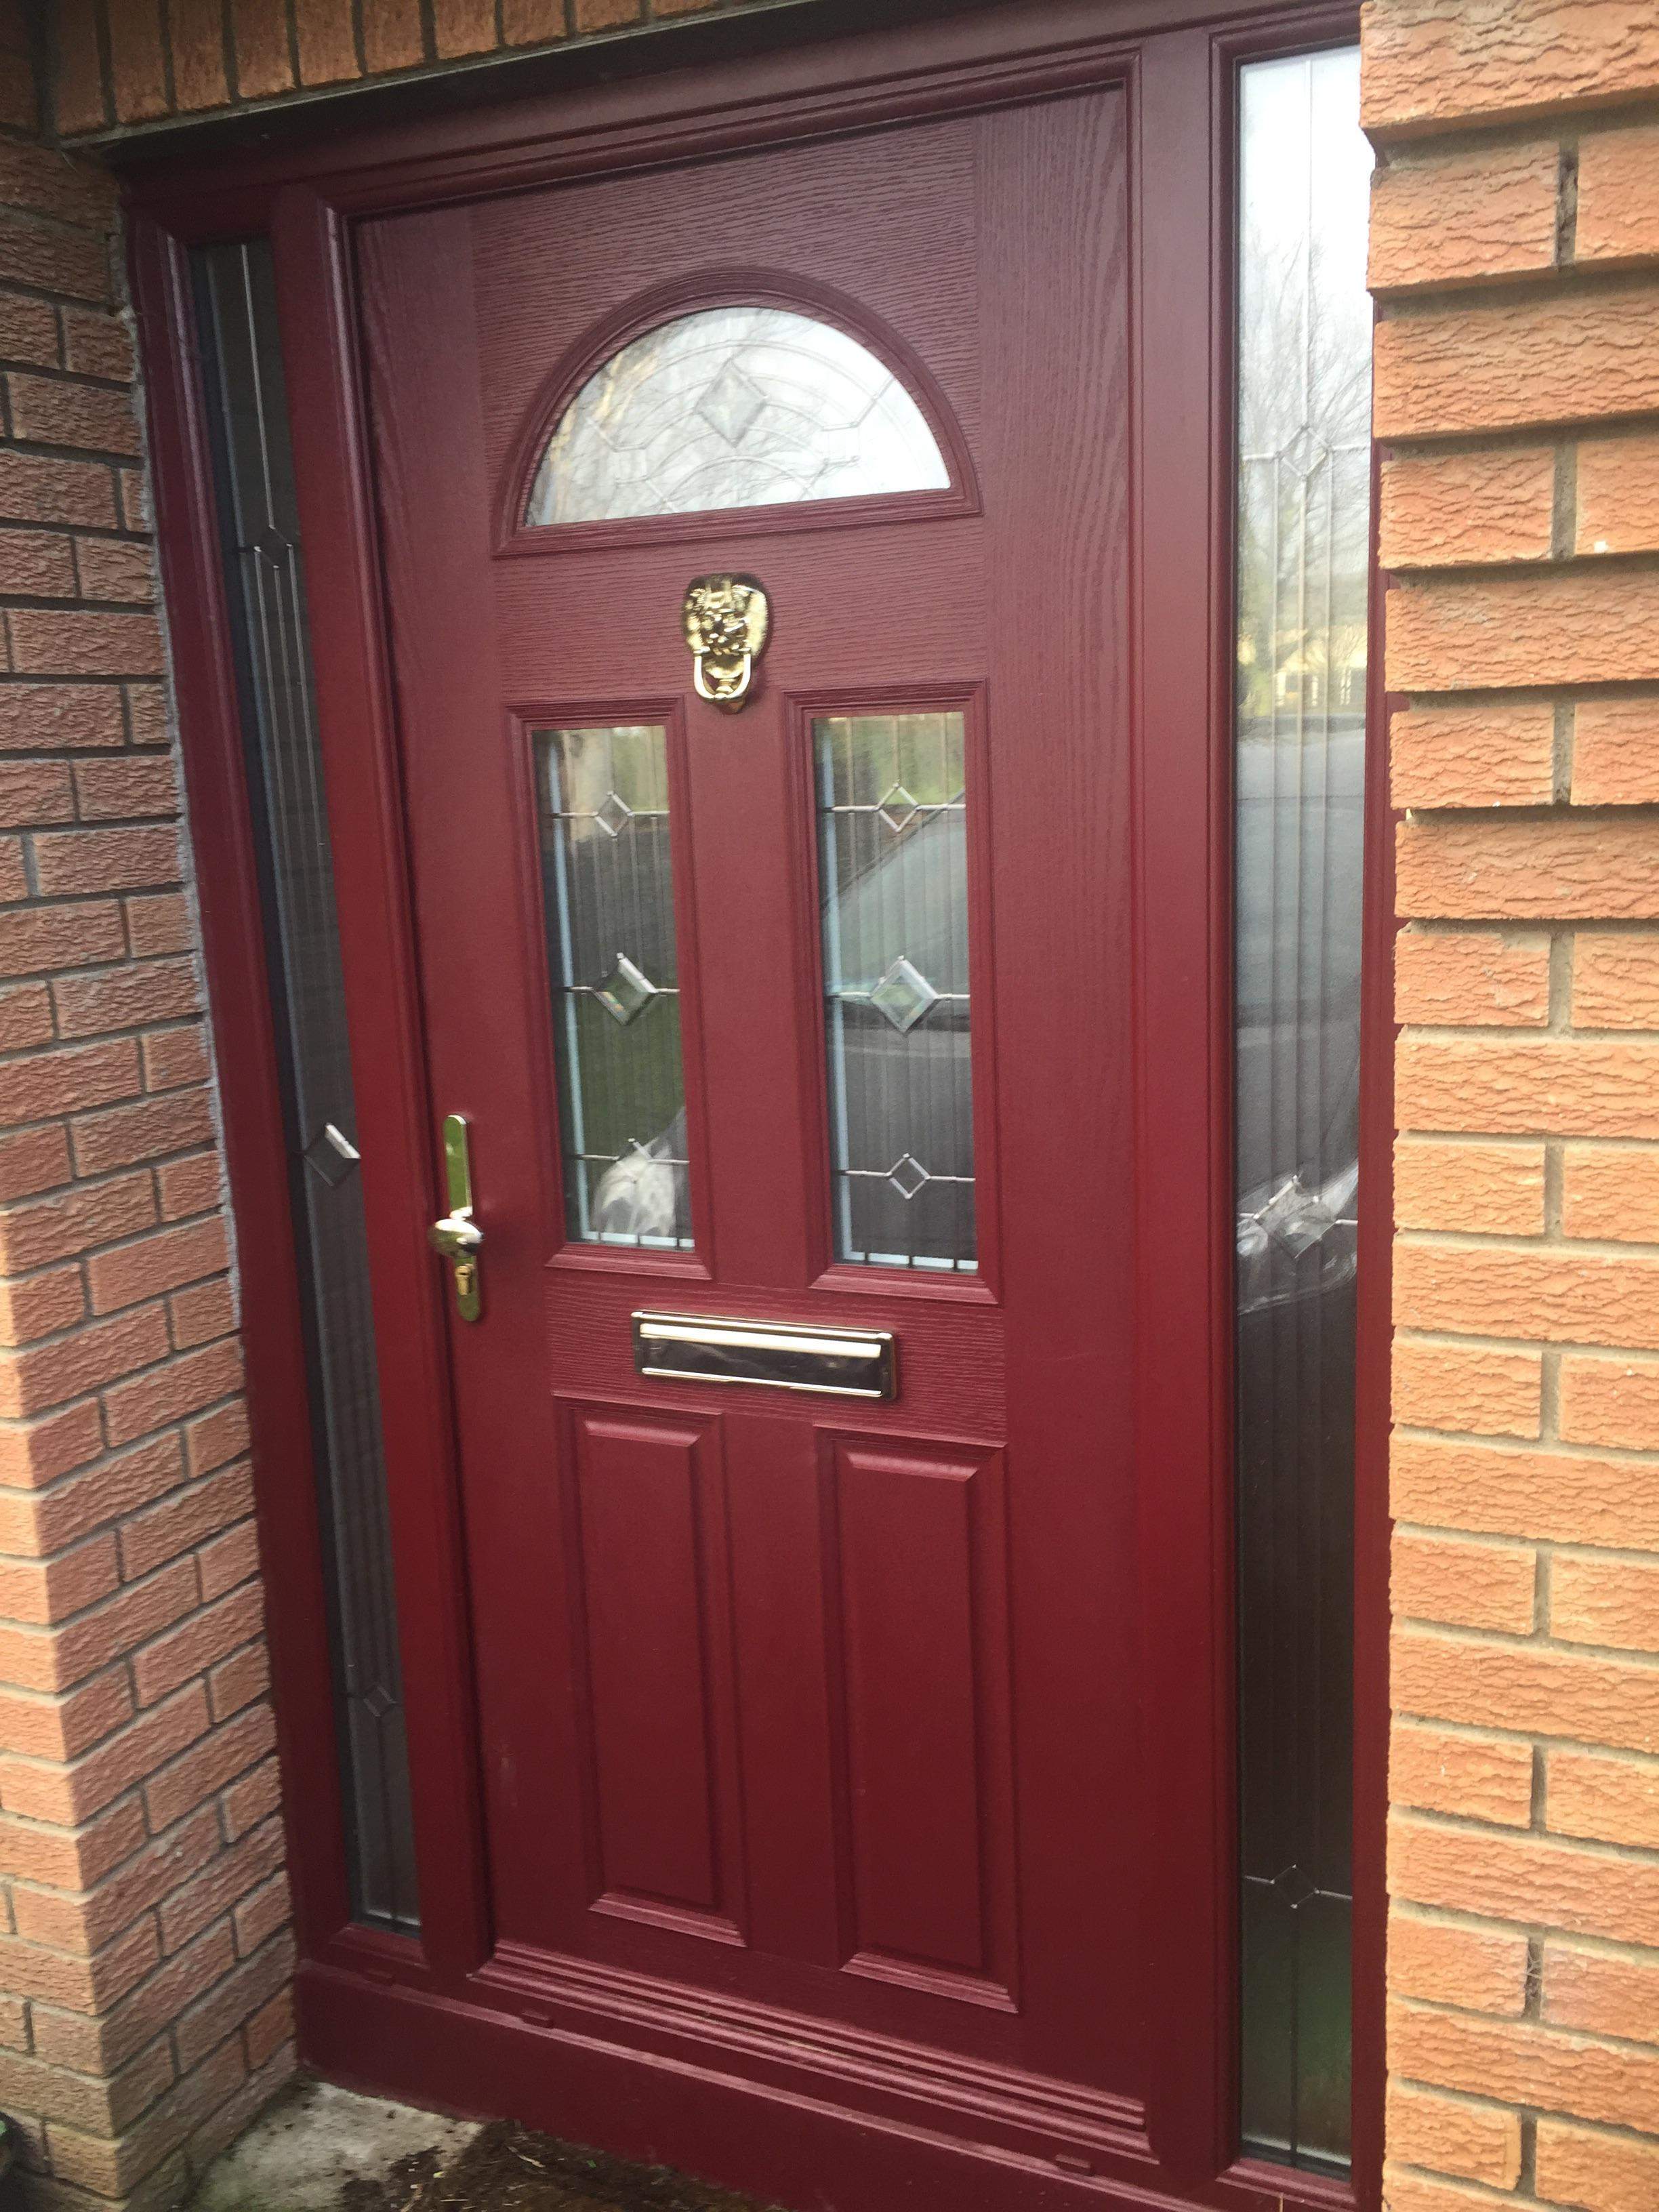 BURGUNDY APEER APC3 COMPOSITE DOOR FITTED  BY ASGARD WINDOWS IN DUBLIN 18.